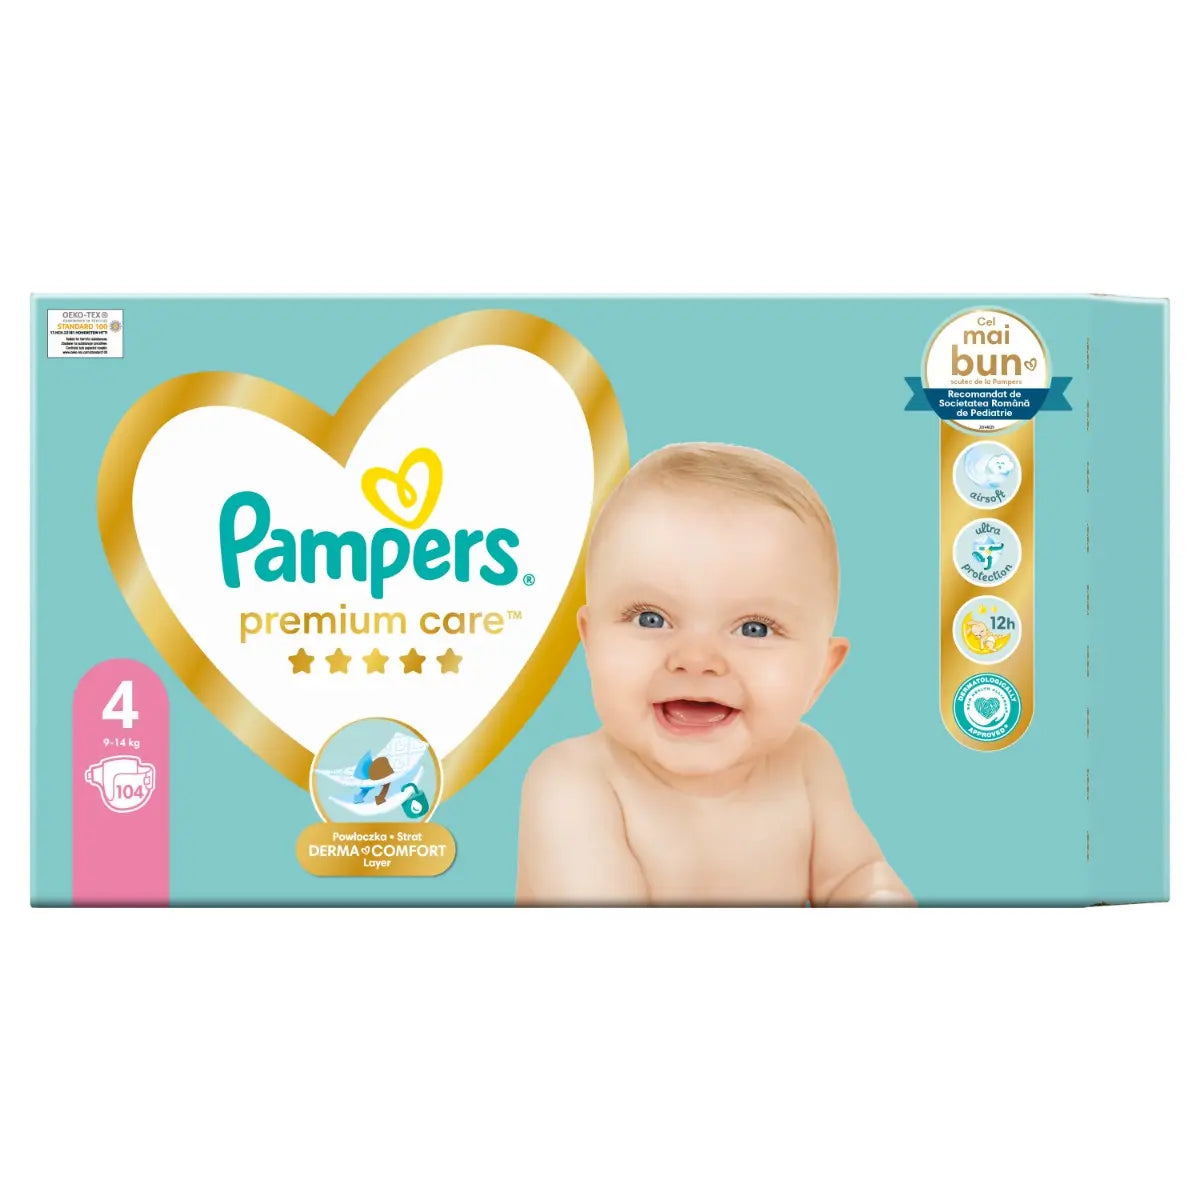 Scutece Pampers Premium Care , 9-14 kg, MArimea Nr.4 infant-ro